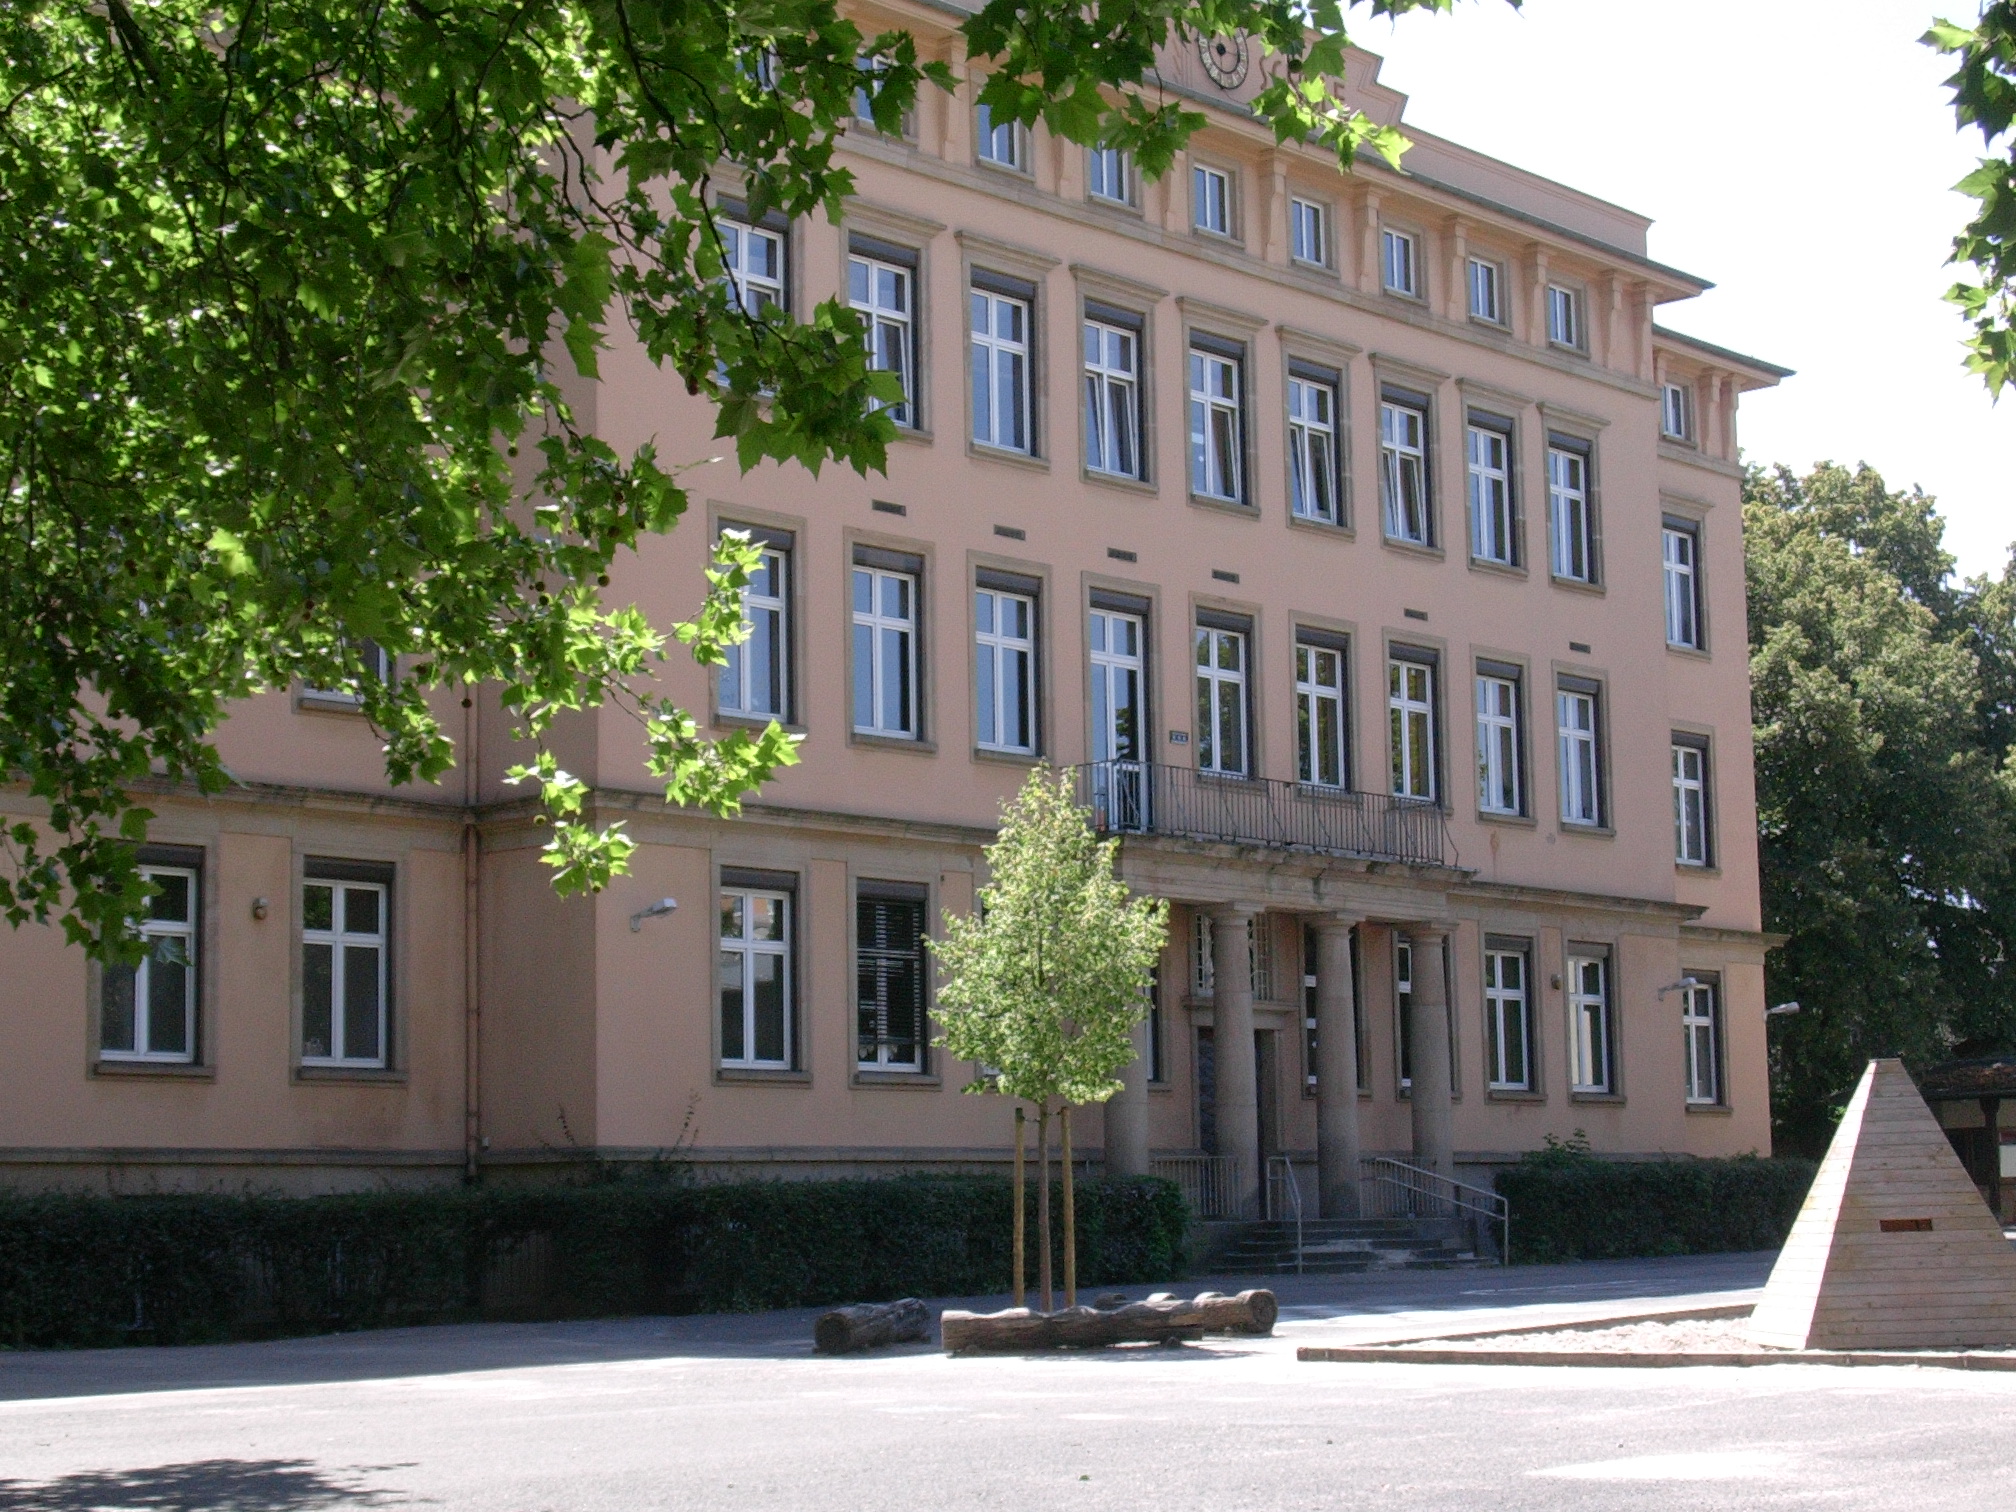 Die Pestalozzi-Grundschule Landau